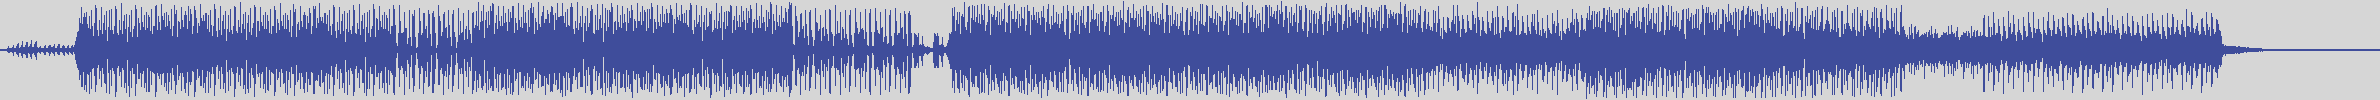 nf_boyz_records [NFY040] Dumping Waffle - Smelly Erosion [Original Mix] audio wave form